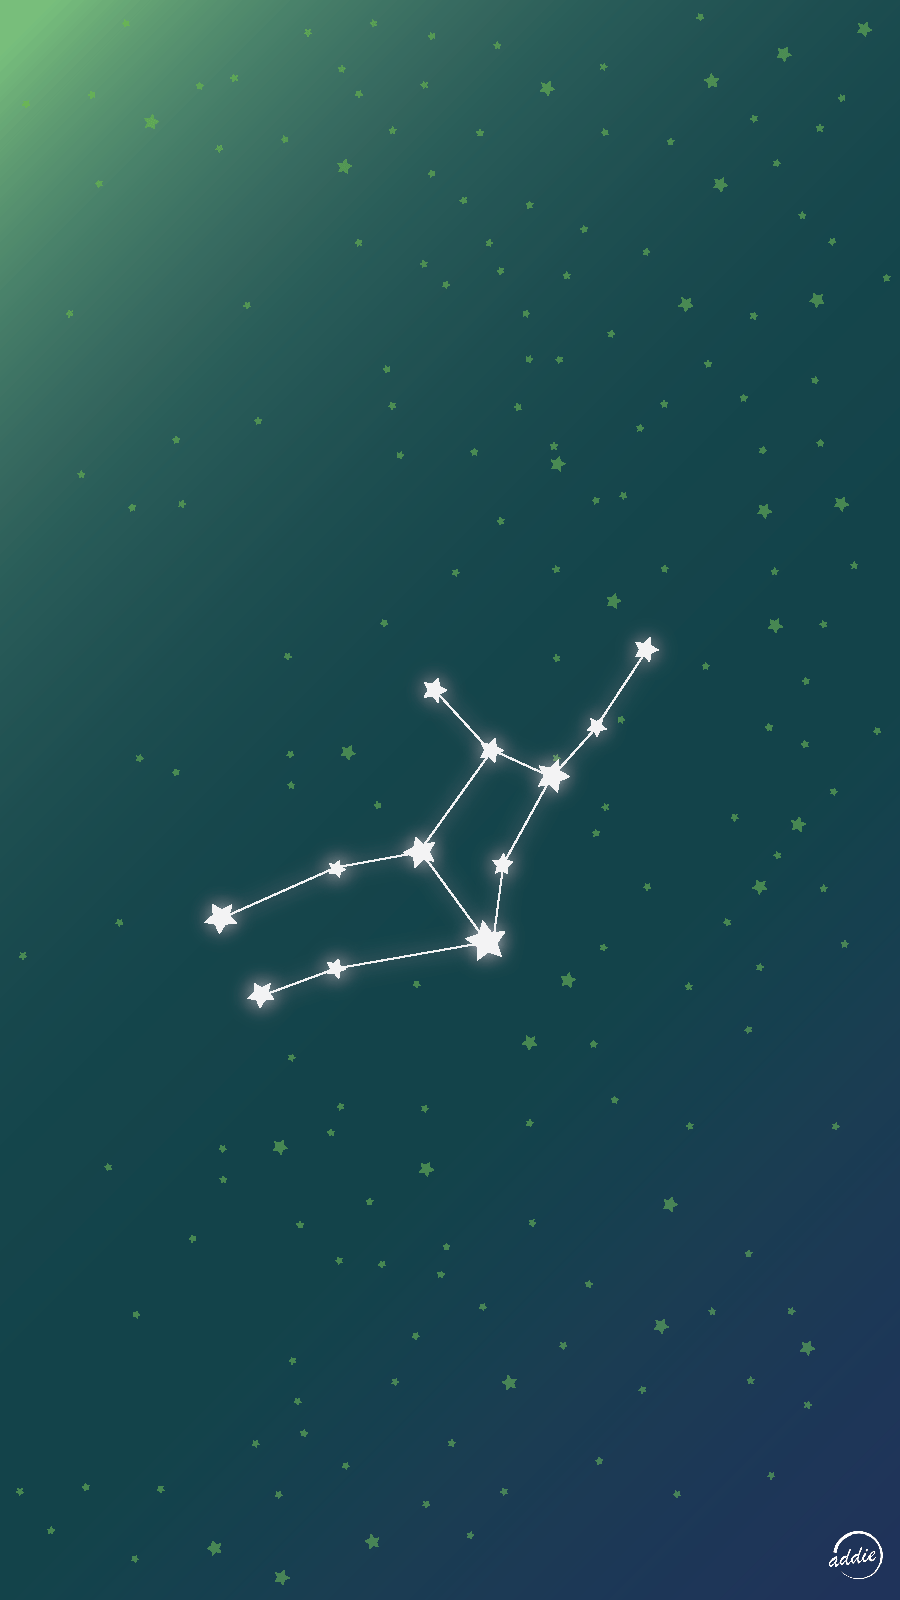 A Leo star sign on a dark blue background - Constellation